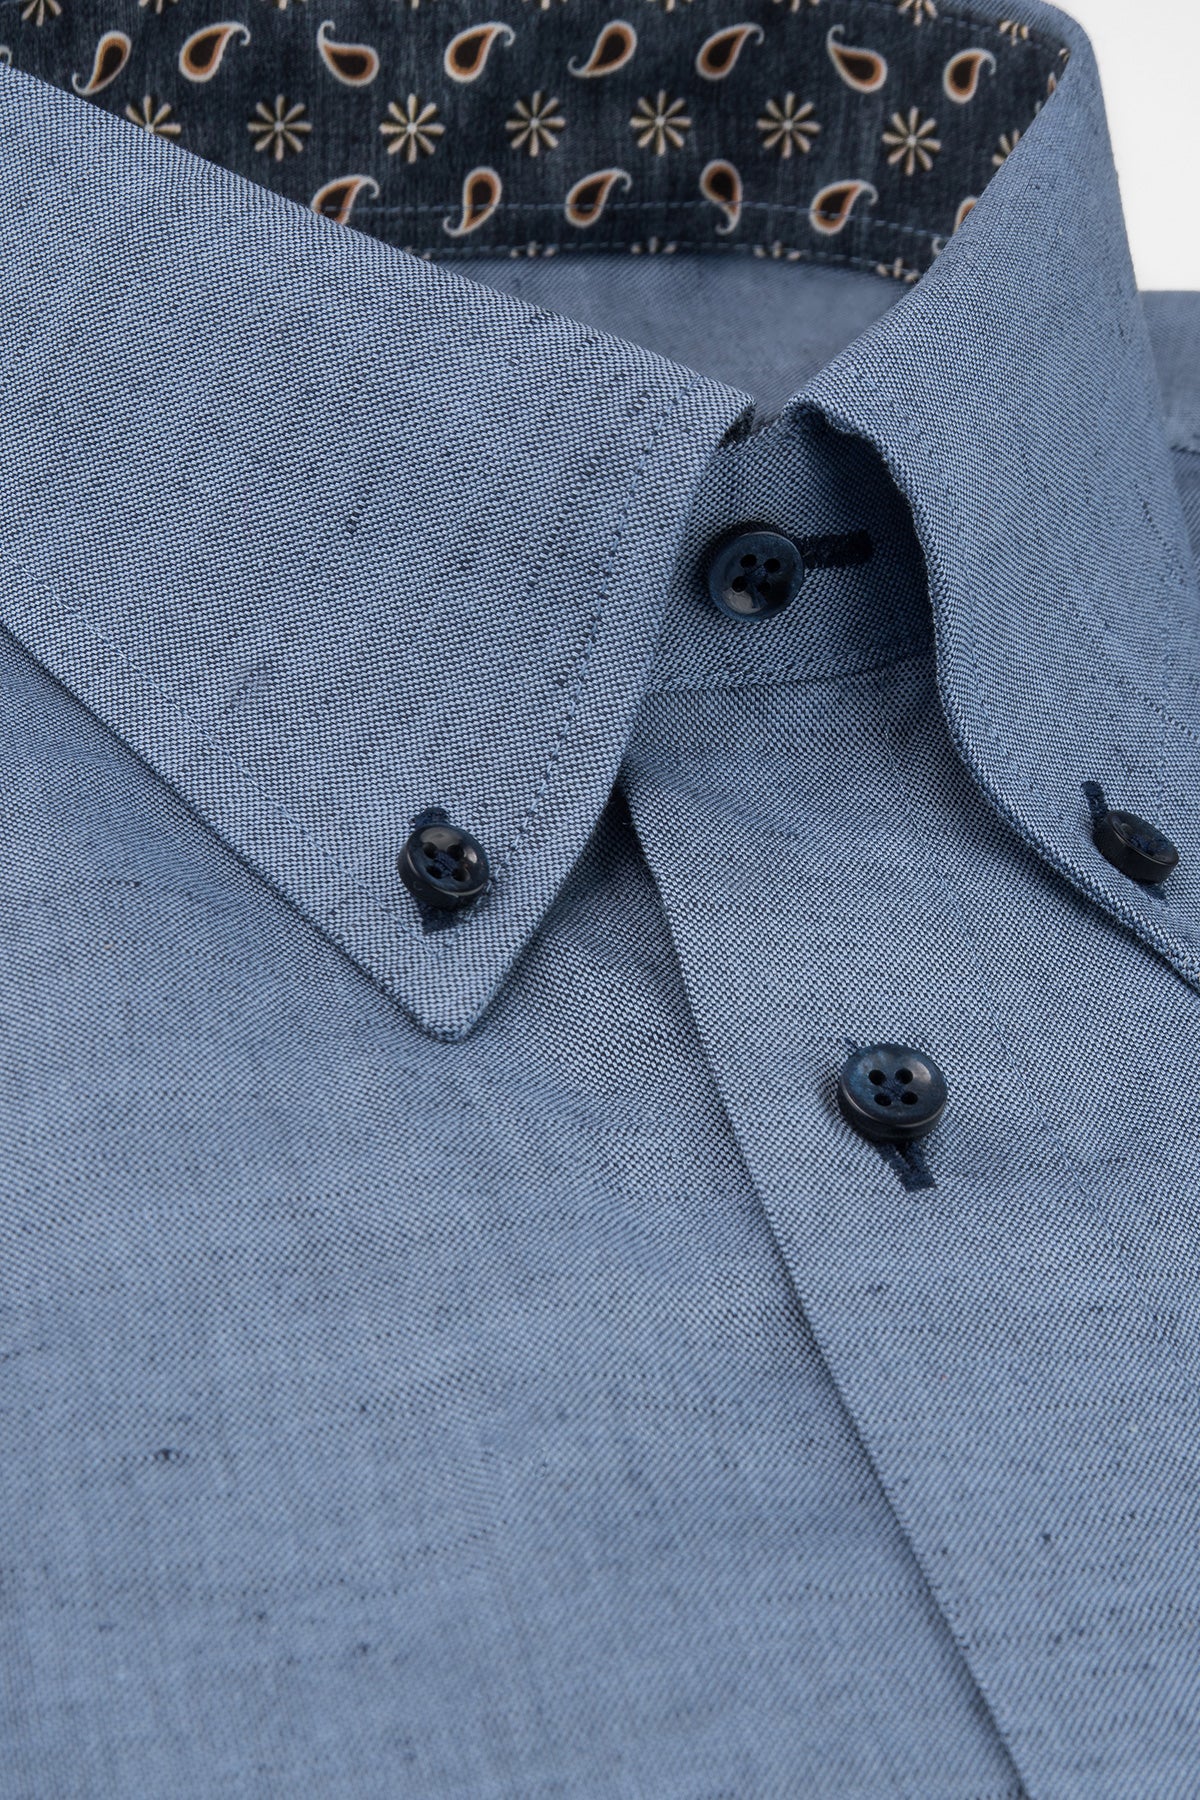 Indigo blue short sleeve regular fit shirt with contrast details